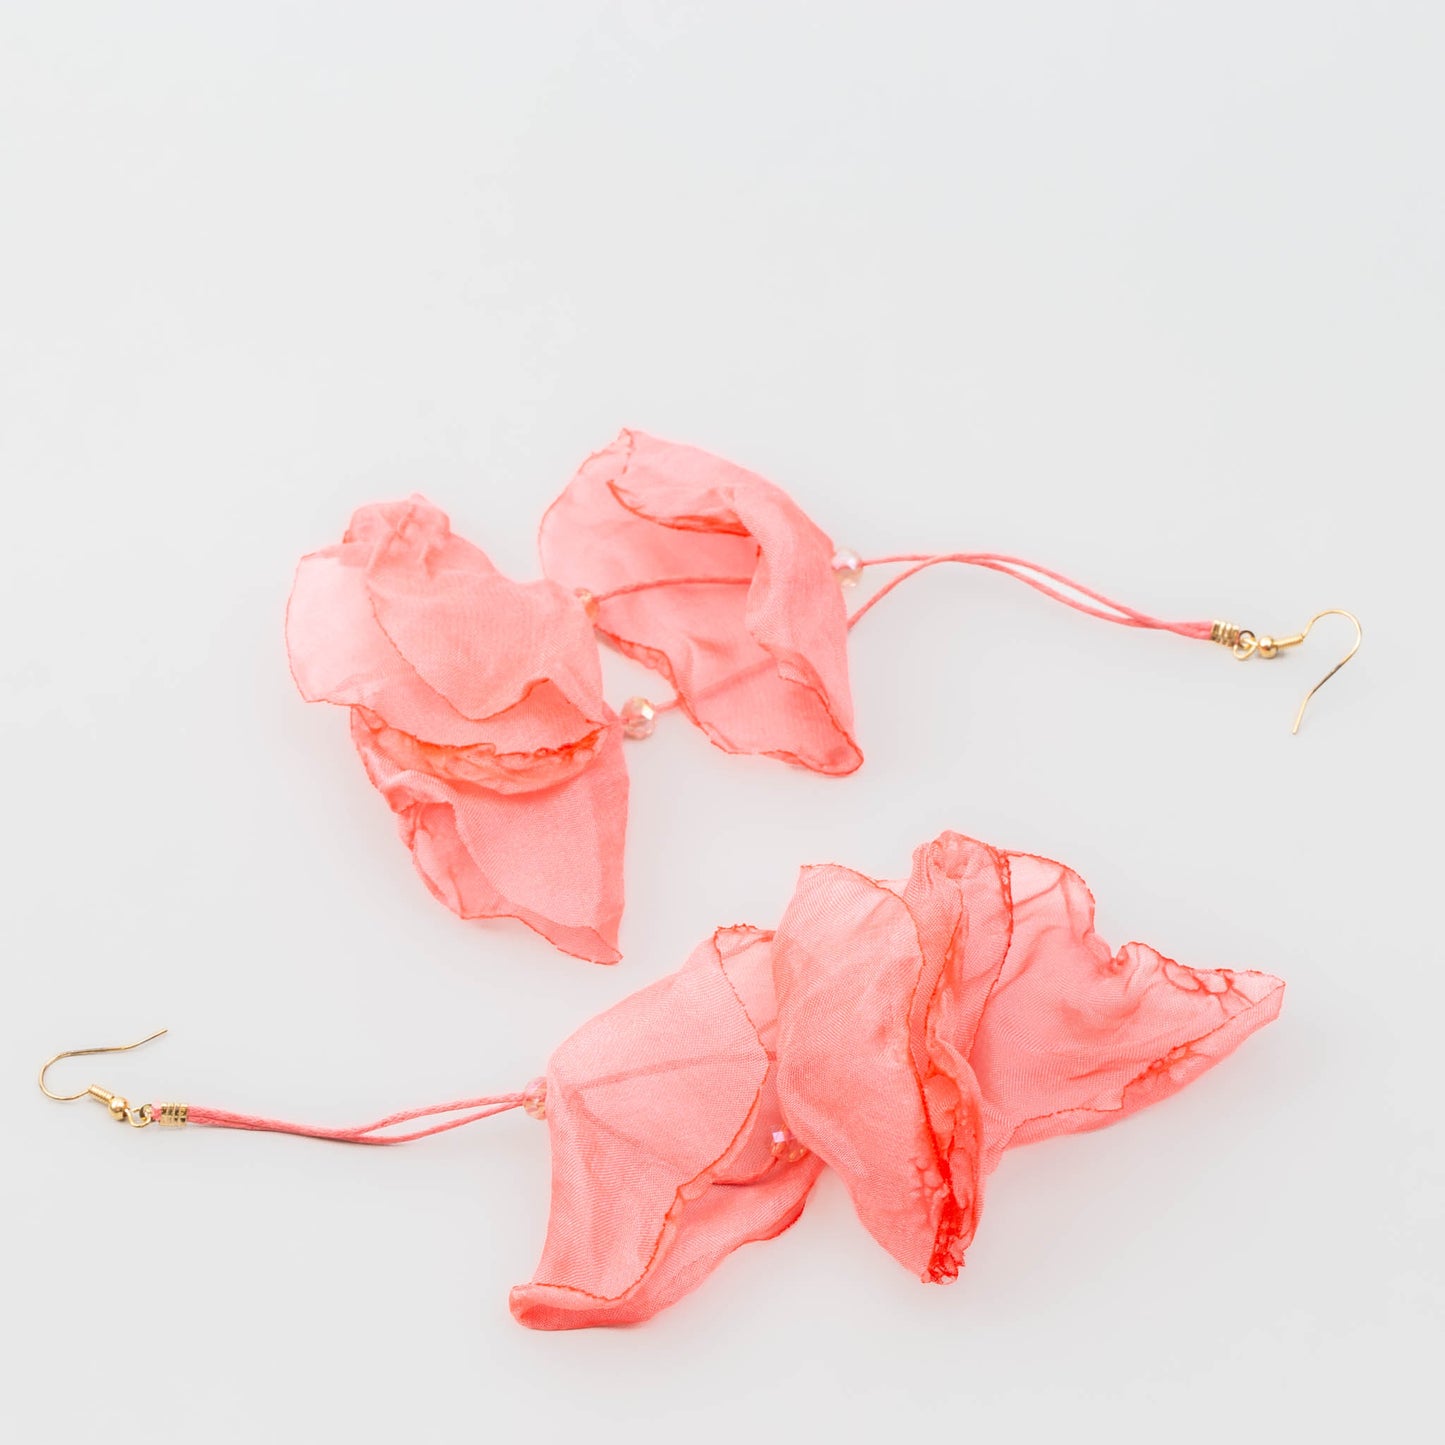 Cercei extra lungi și ușori cu petale delicate din material textil - Strawberry